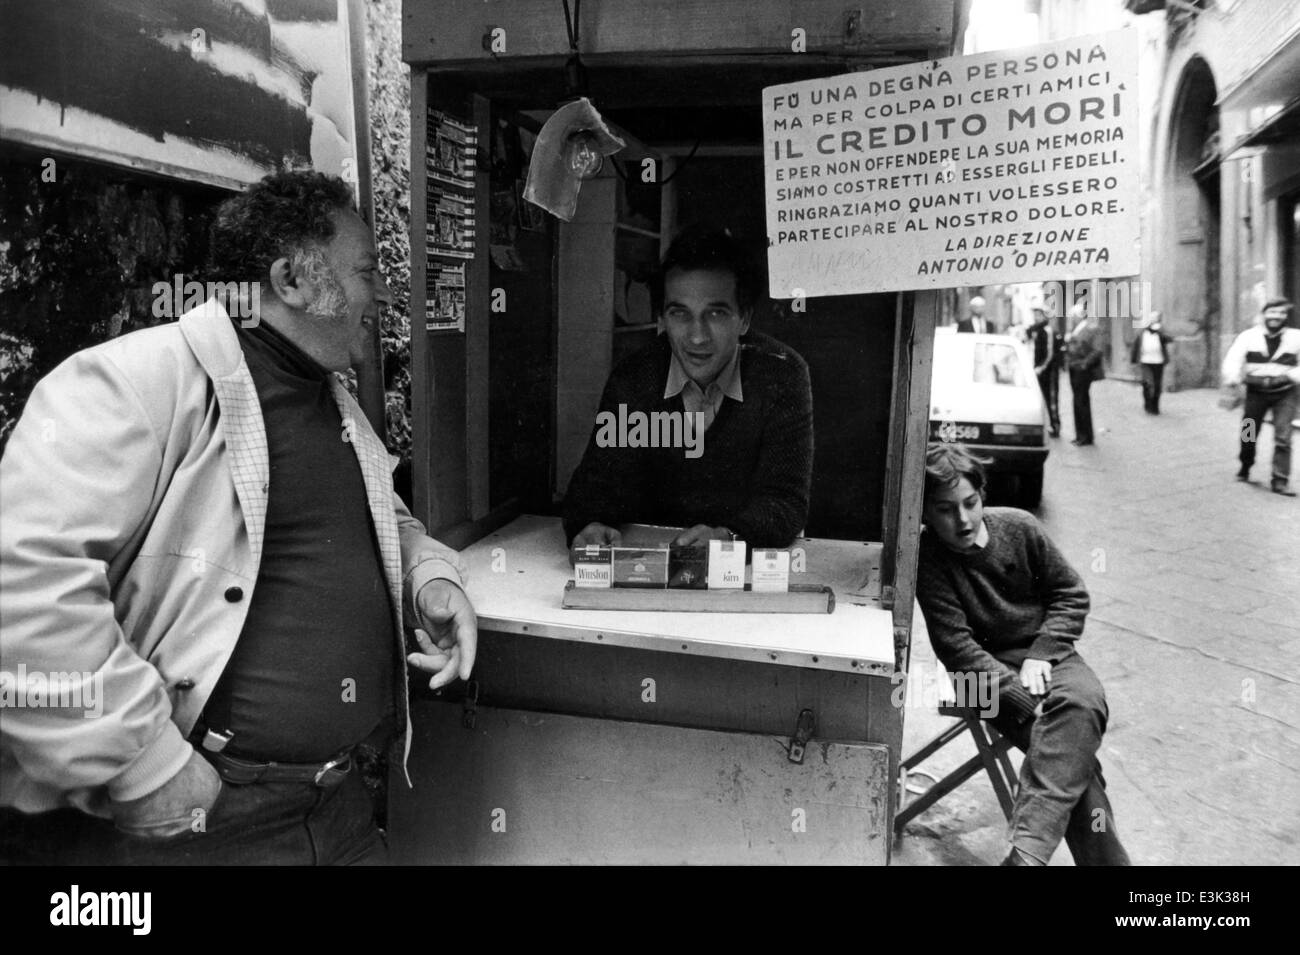 La contrebande de cigarettes,naples,Italie,70s Banque D'Images